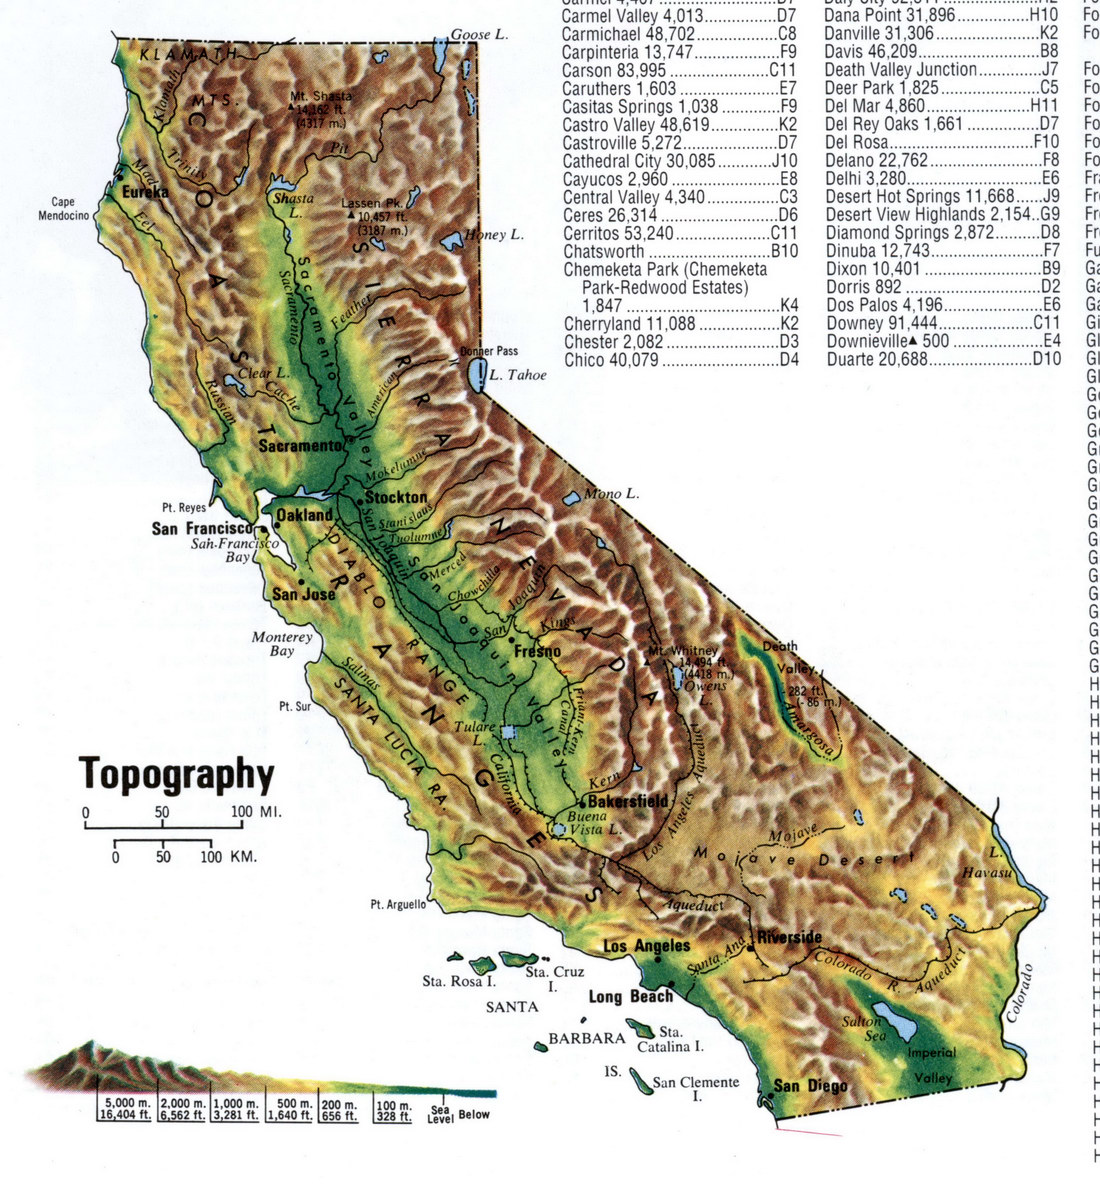 Landscape map of California